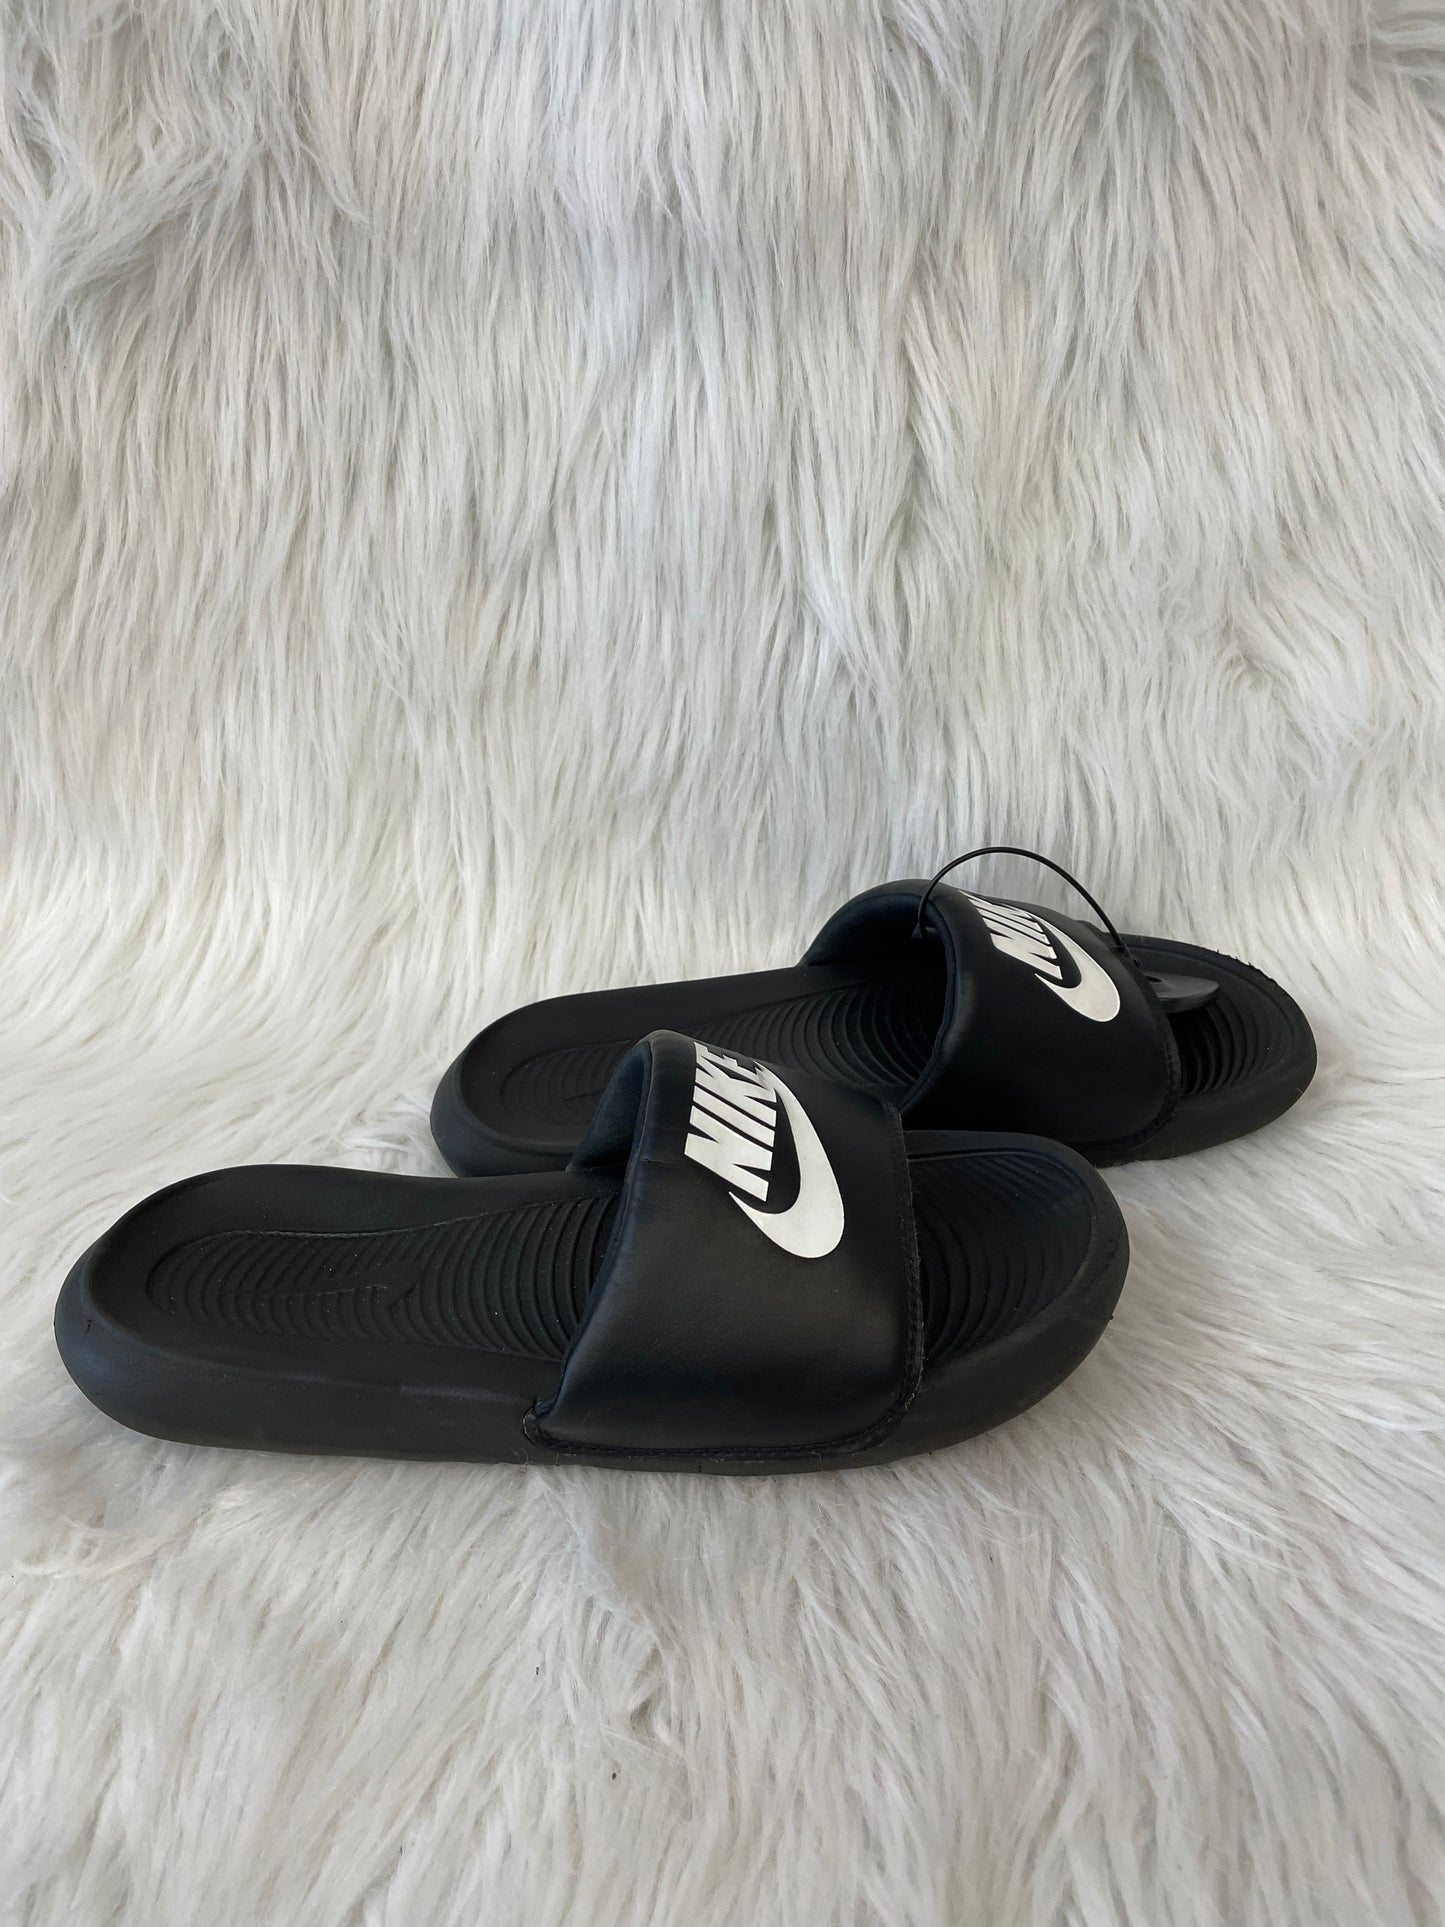 Black & White Sandals Sport Nike, Size 7